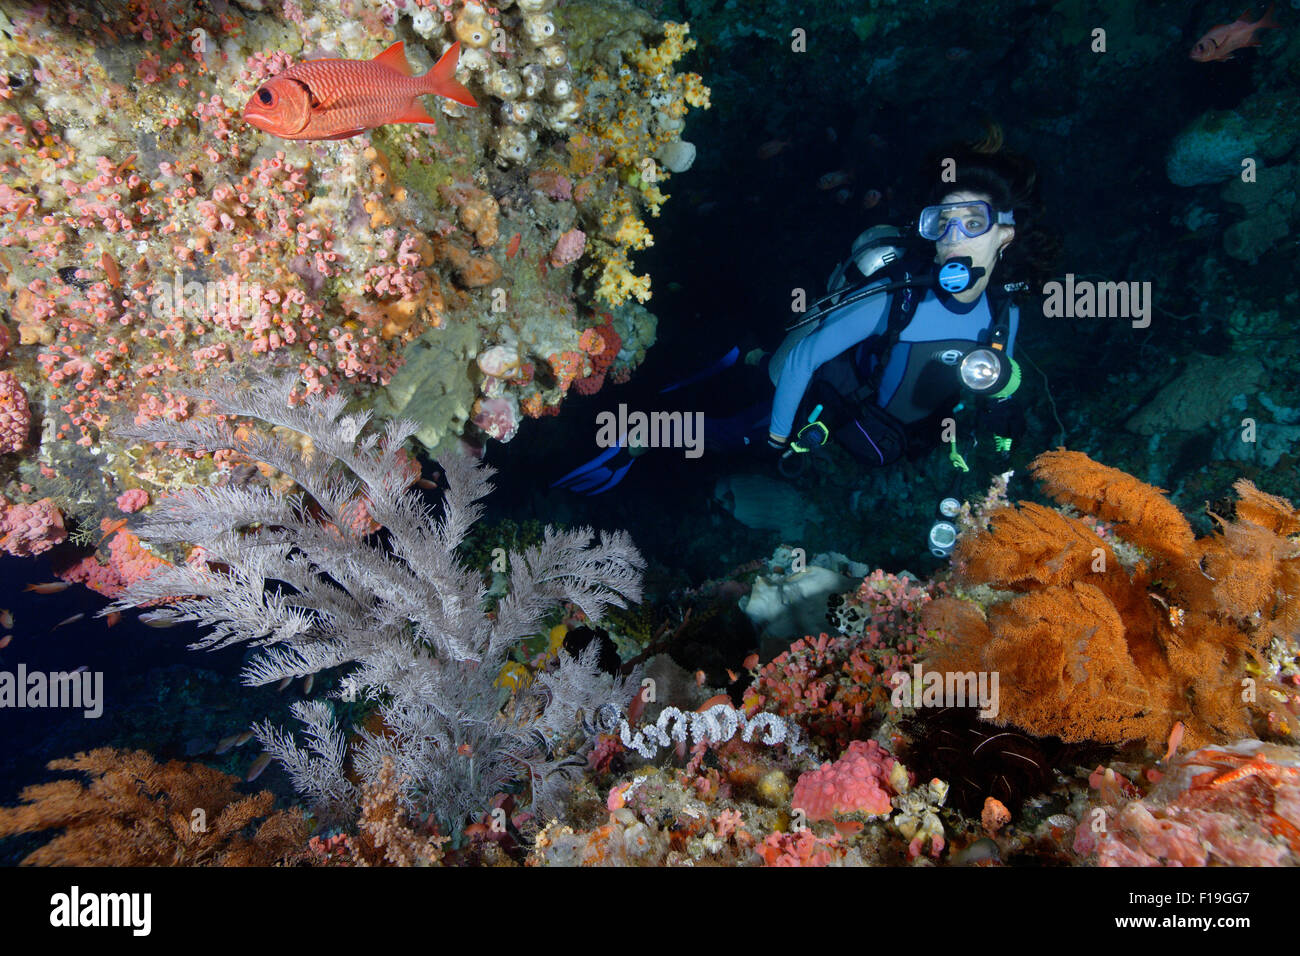 px0452-D. Scuba Diver (Modell freigegeben) erforscht Höhle mit schwarzen Korallen Büschen geschmückt. Indonesien, tropischen Pazifik. Foto C Stockfoto